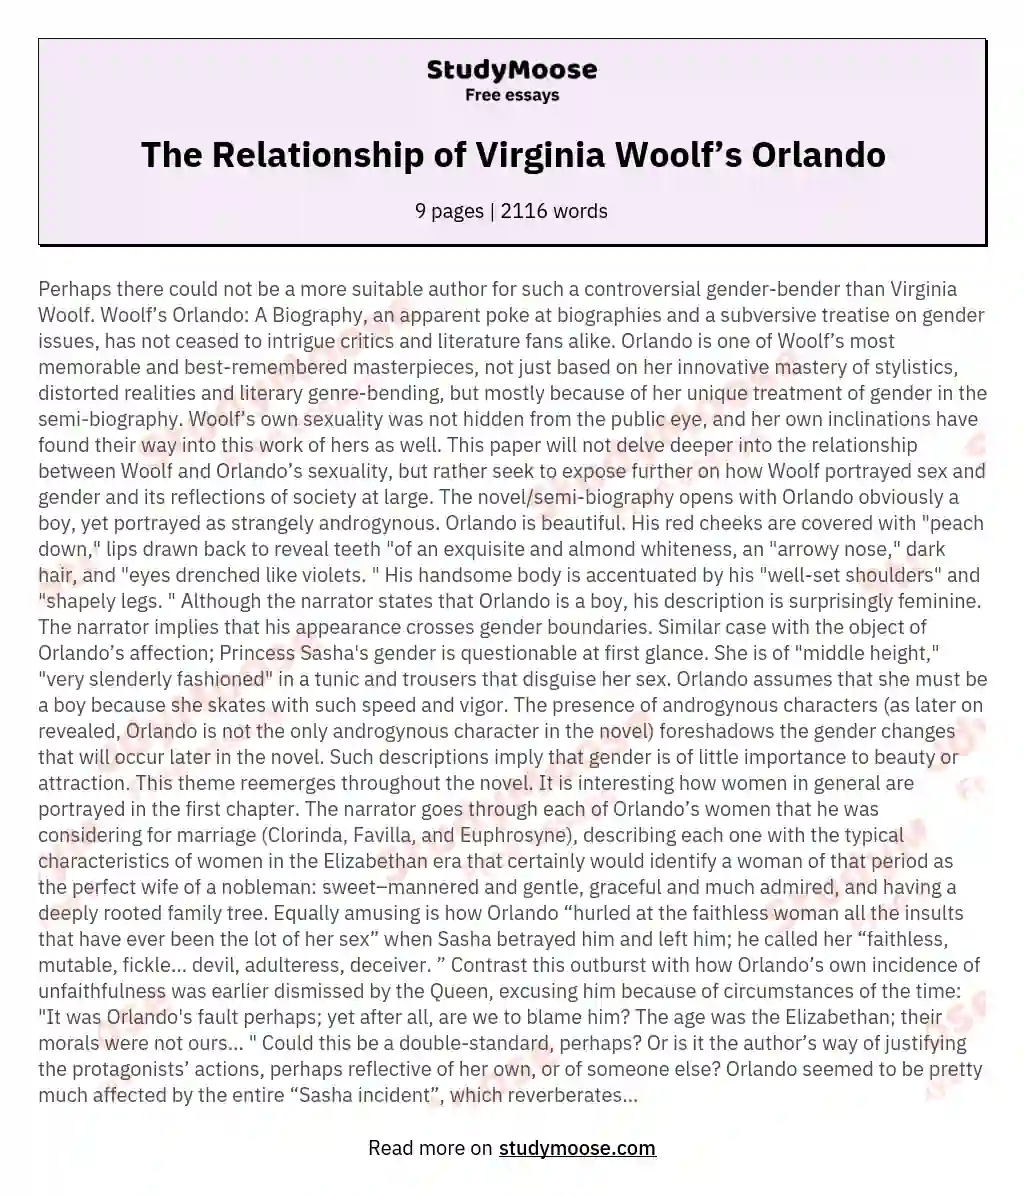 The Relationship of Virginia Woolf’s Orlando essay